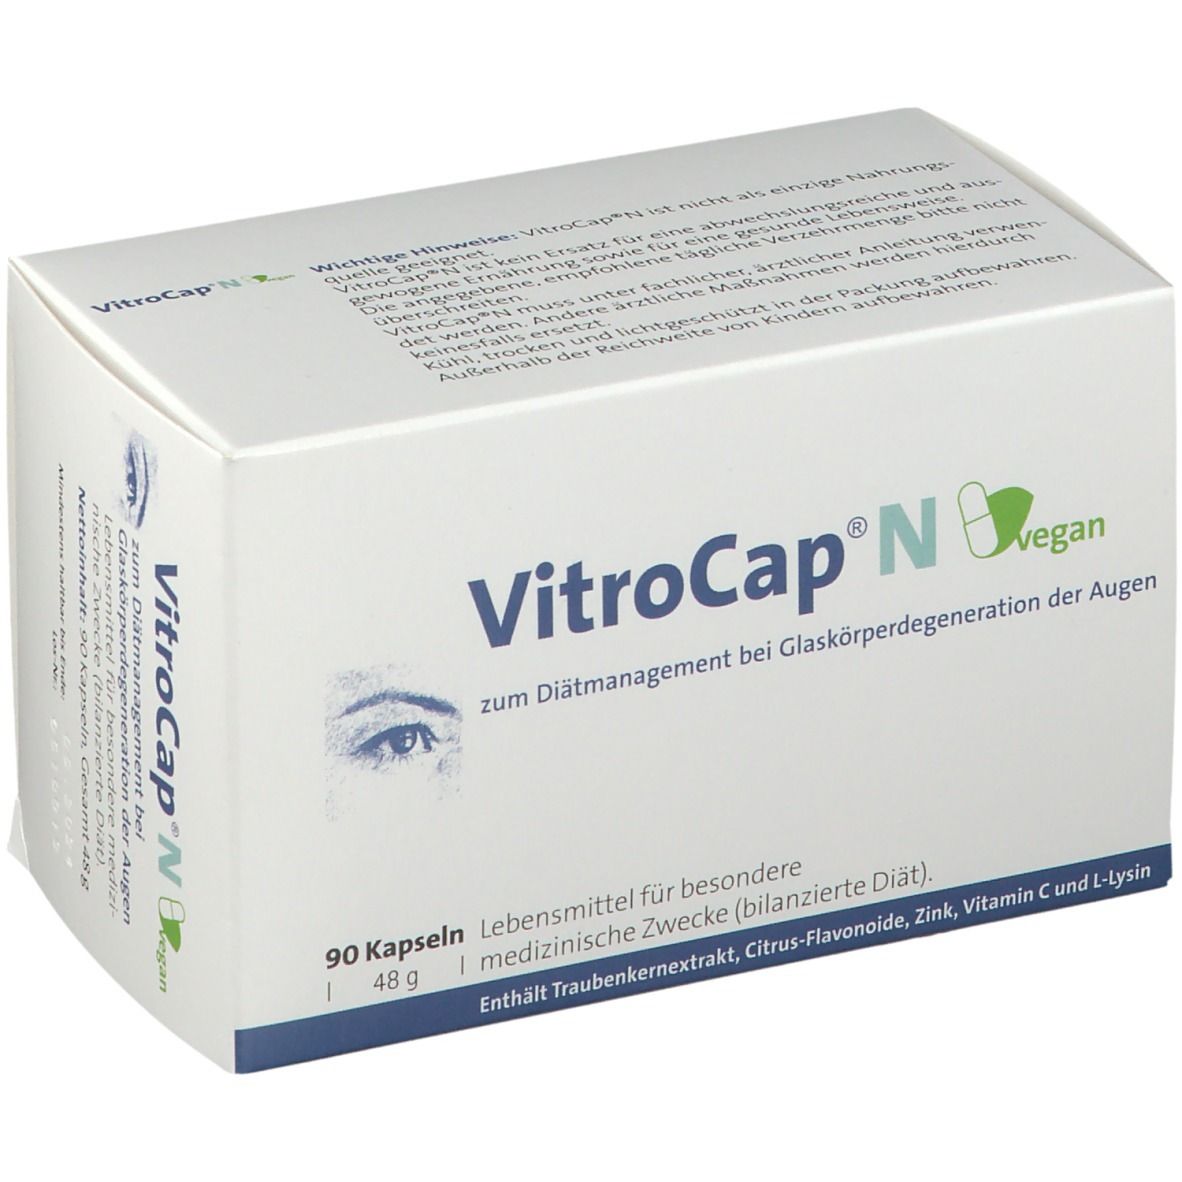 Vitrocap® n vegan